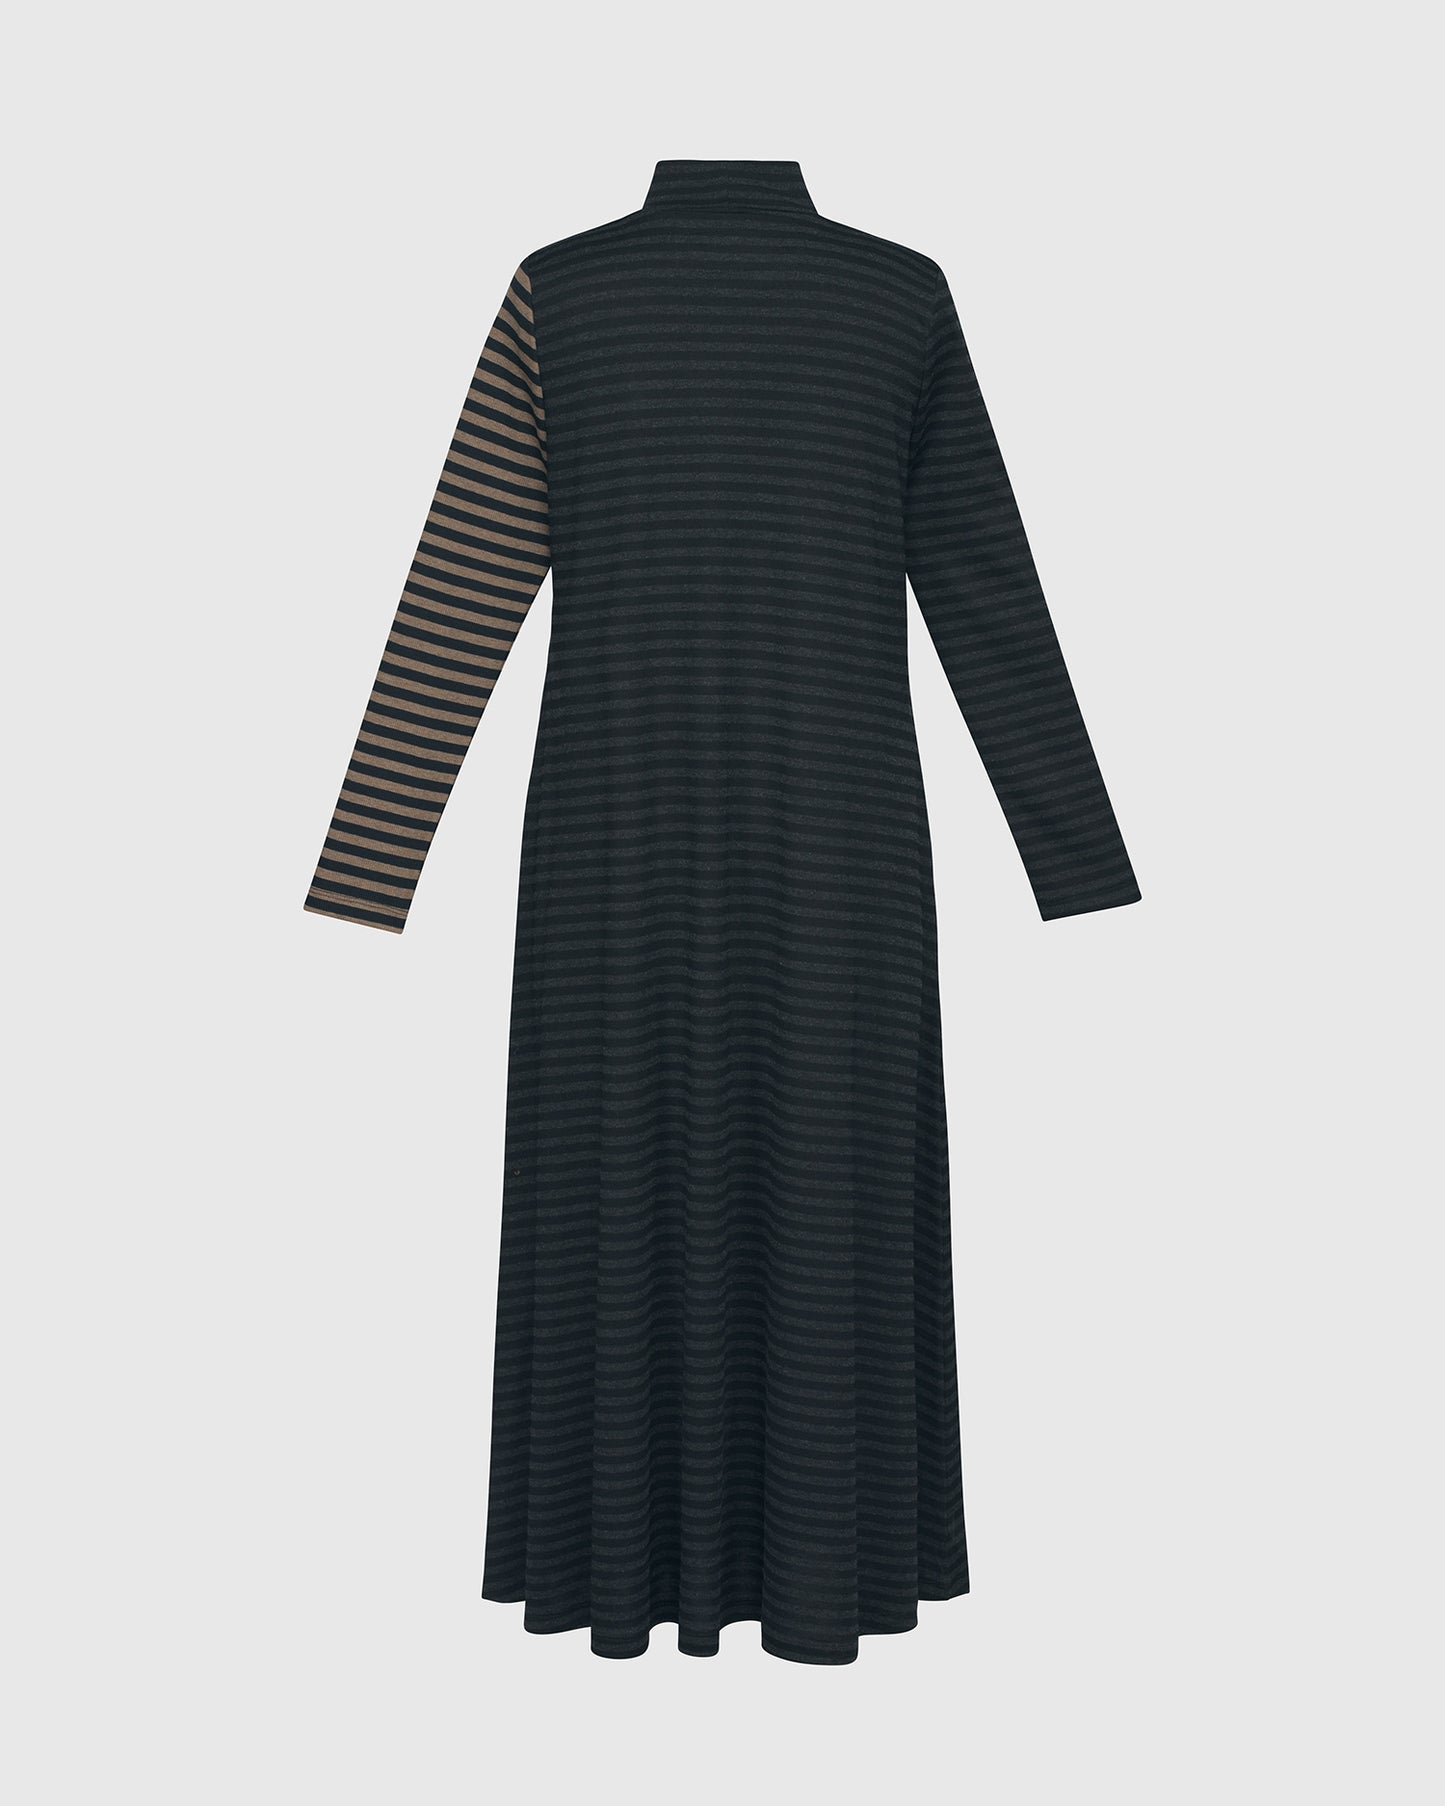 Urban Mockneck Swing Dress, Stripes by Alembika